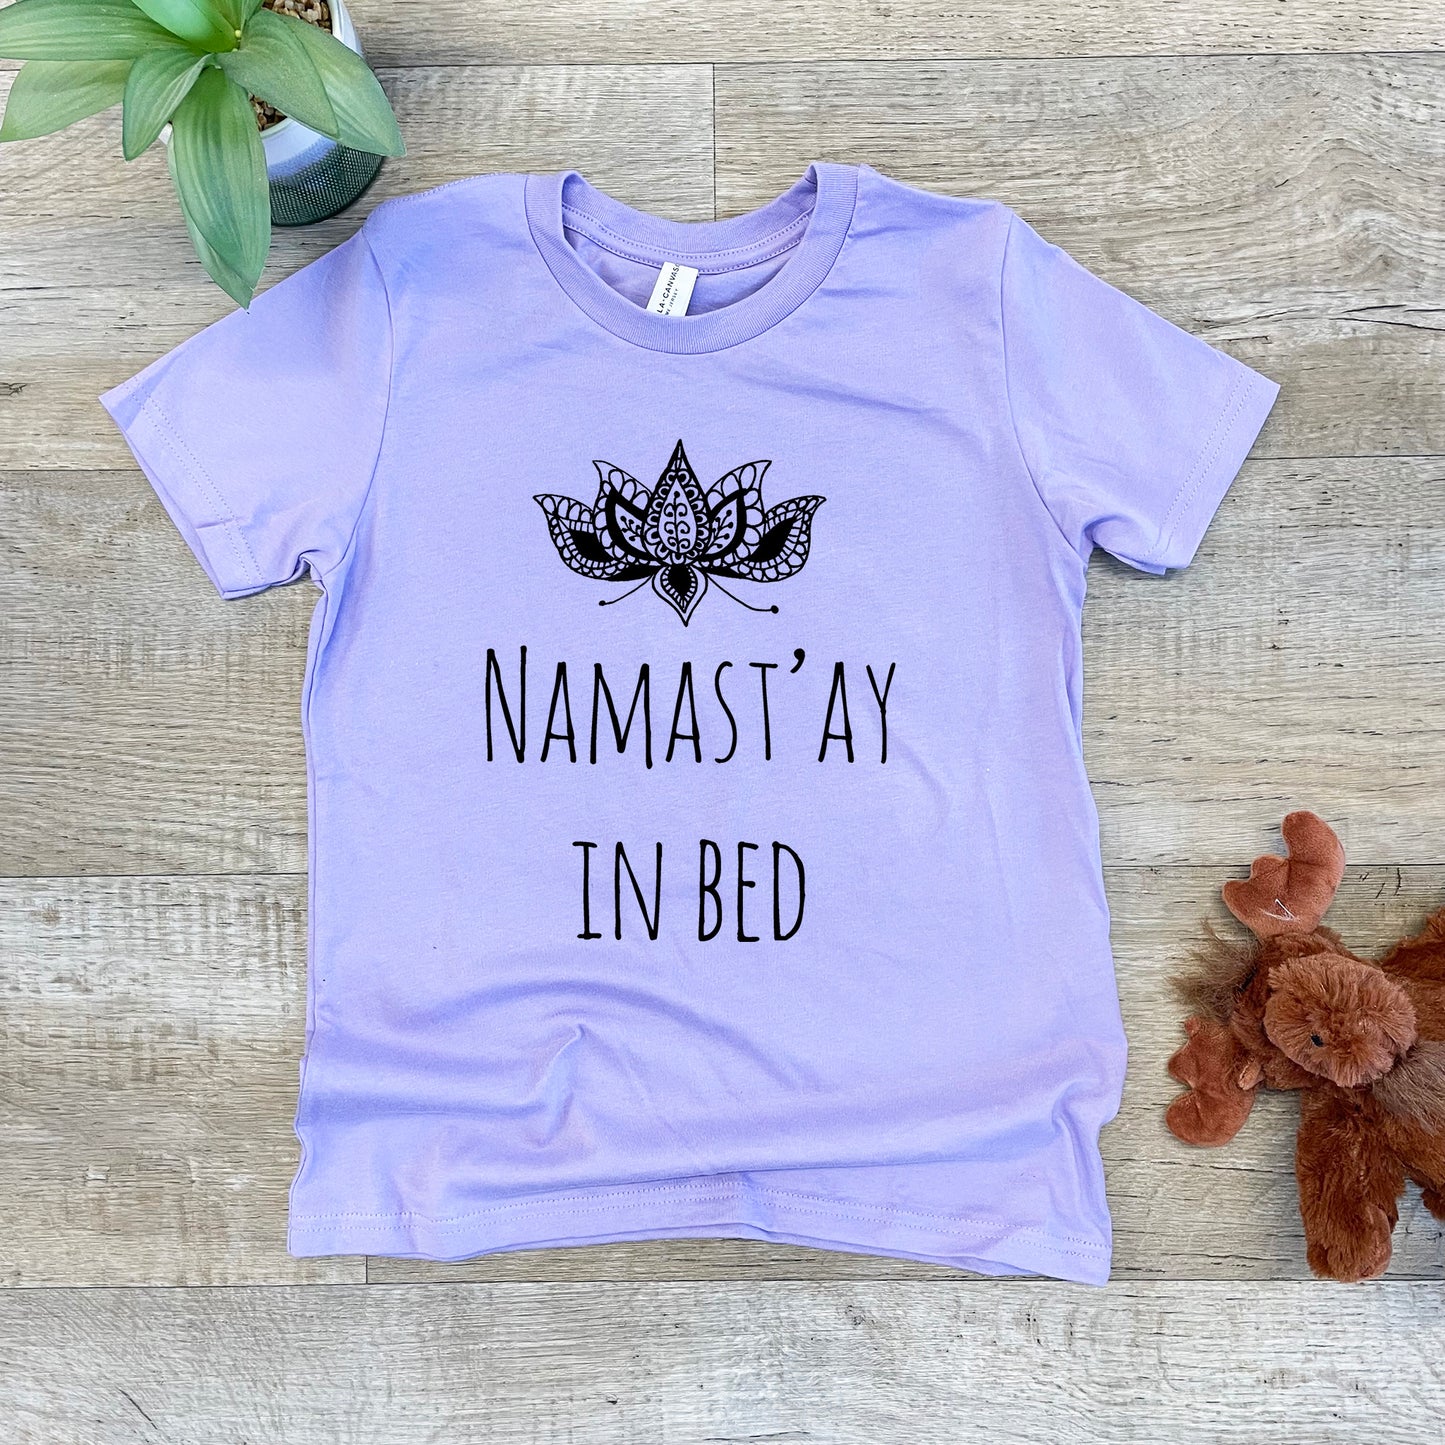 Namast'ay In Bed - Kid's Tee - Columbia Blue or Lavender